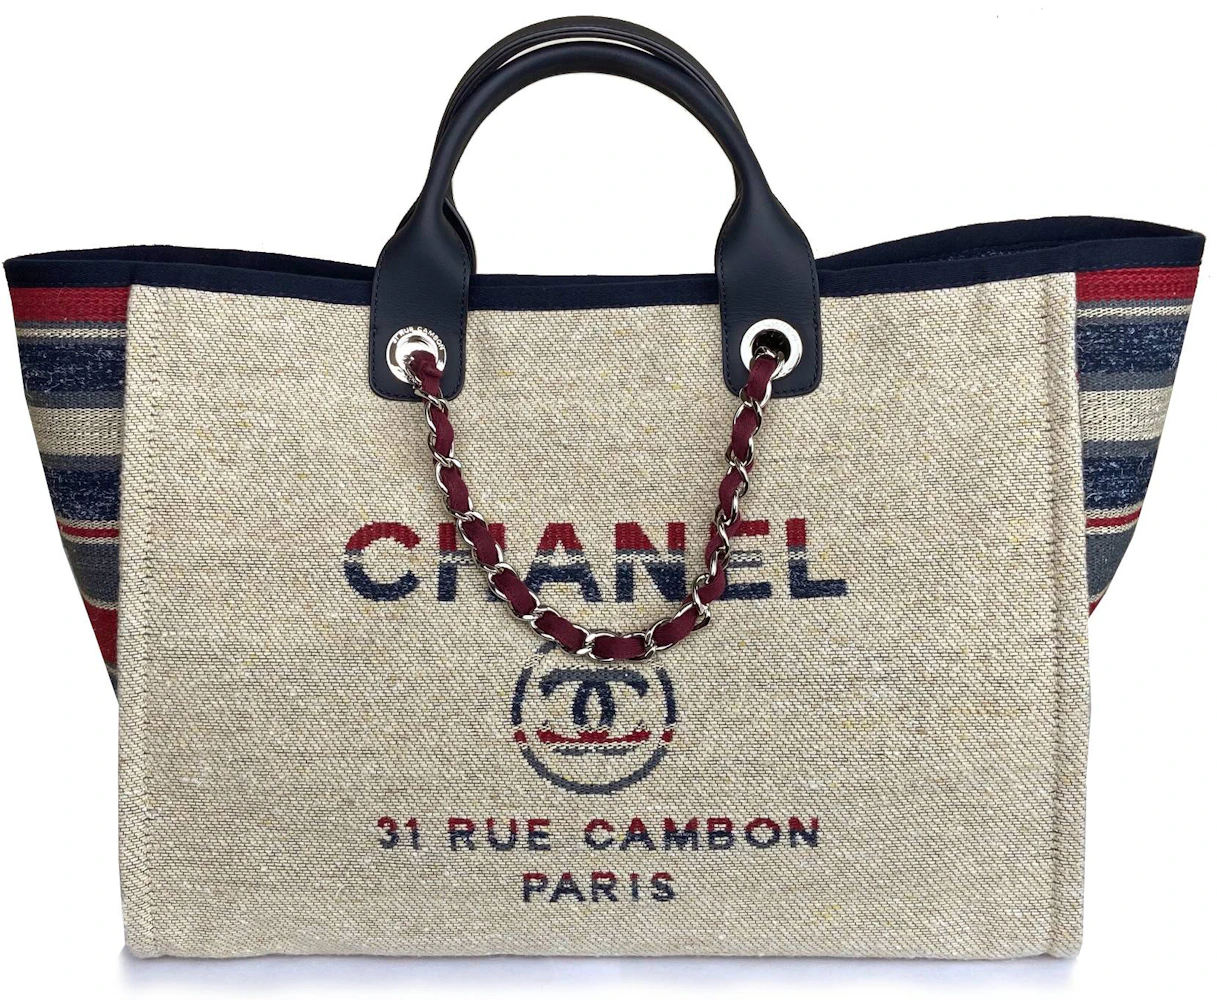 Chanel Beige Raffia Large Deauville Tote Chanel